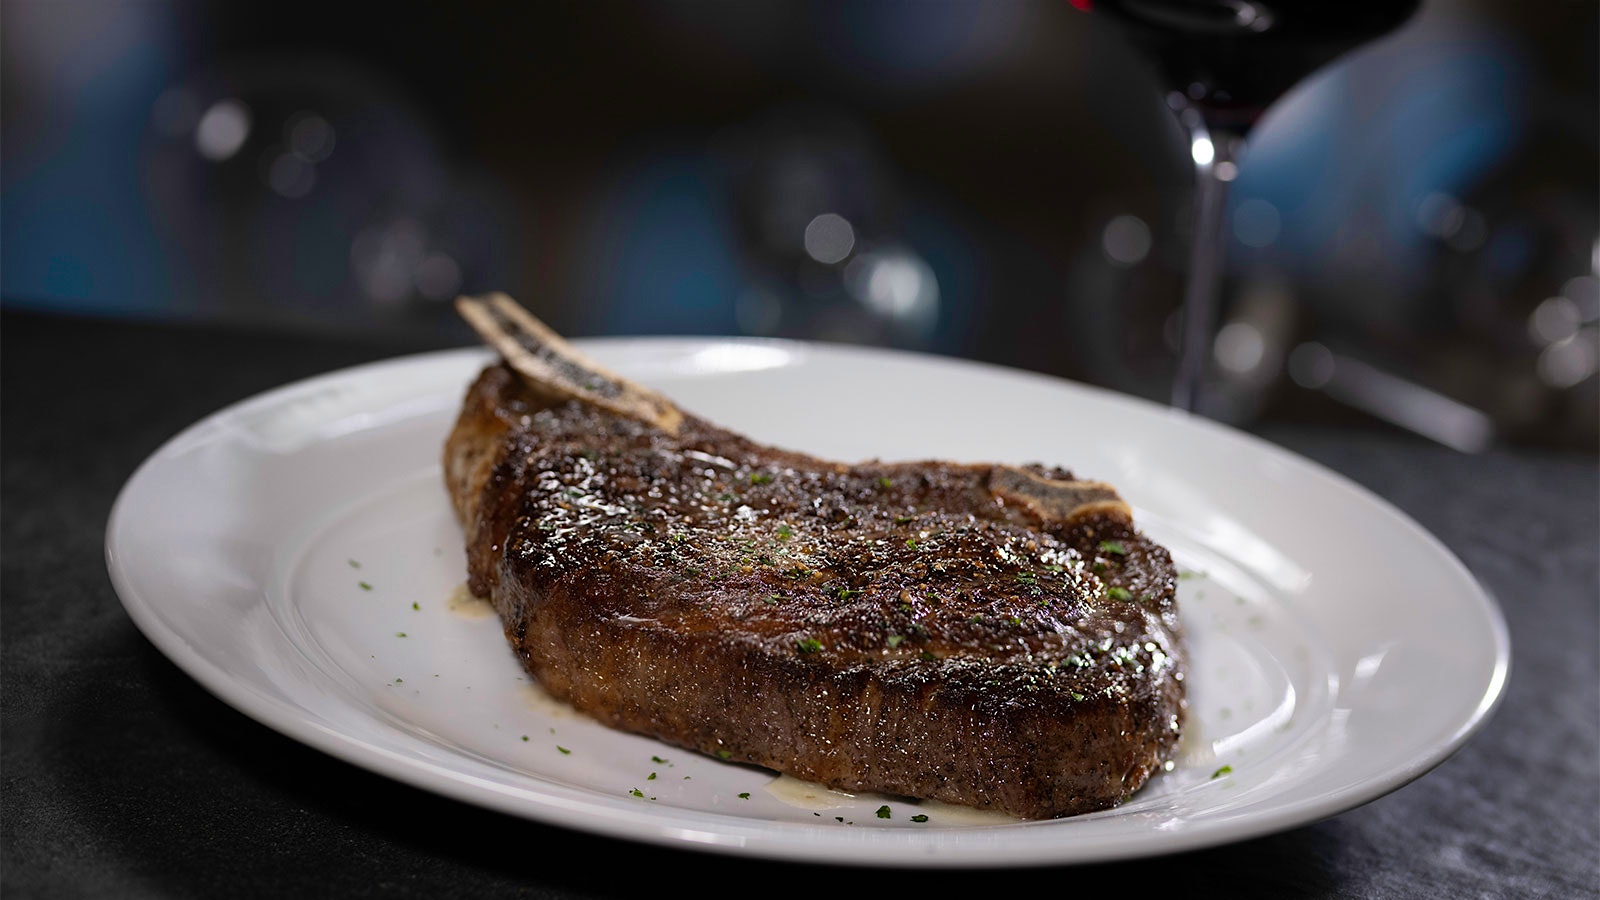  A bone-in ribeye steak on a plate at Eddie V's